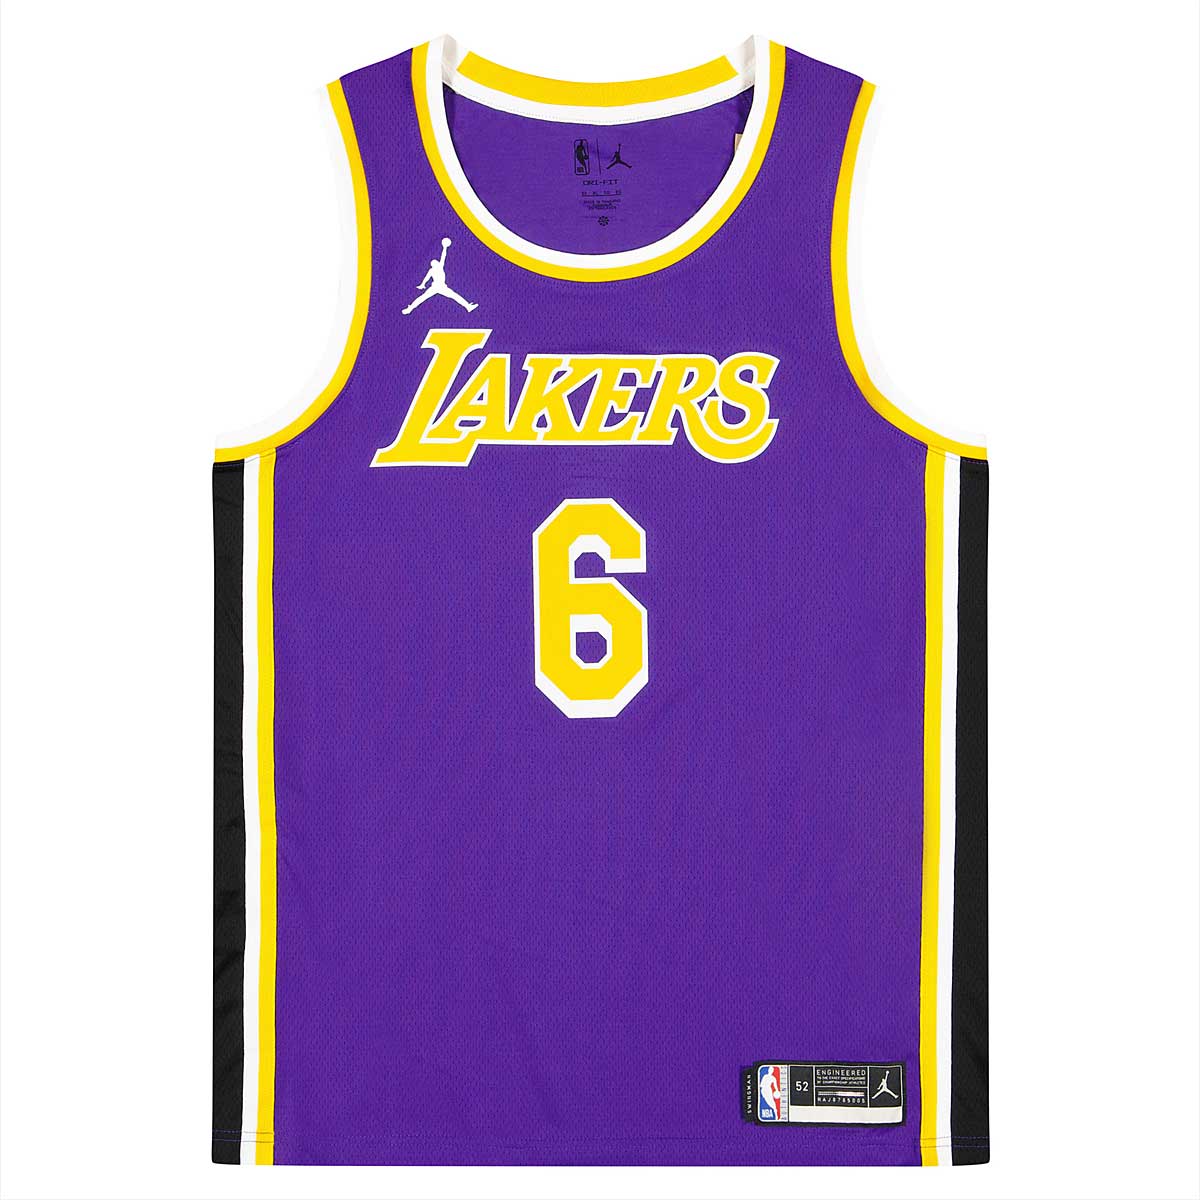 Nike Basketball NBA LA Lakers Lebron James jersey unisex vest in white